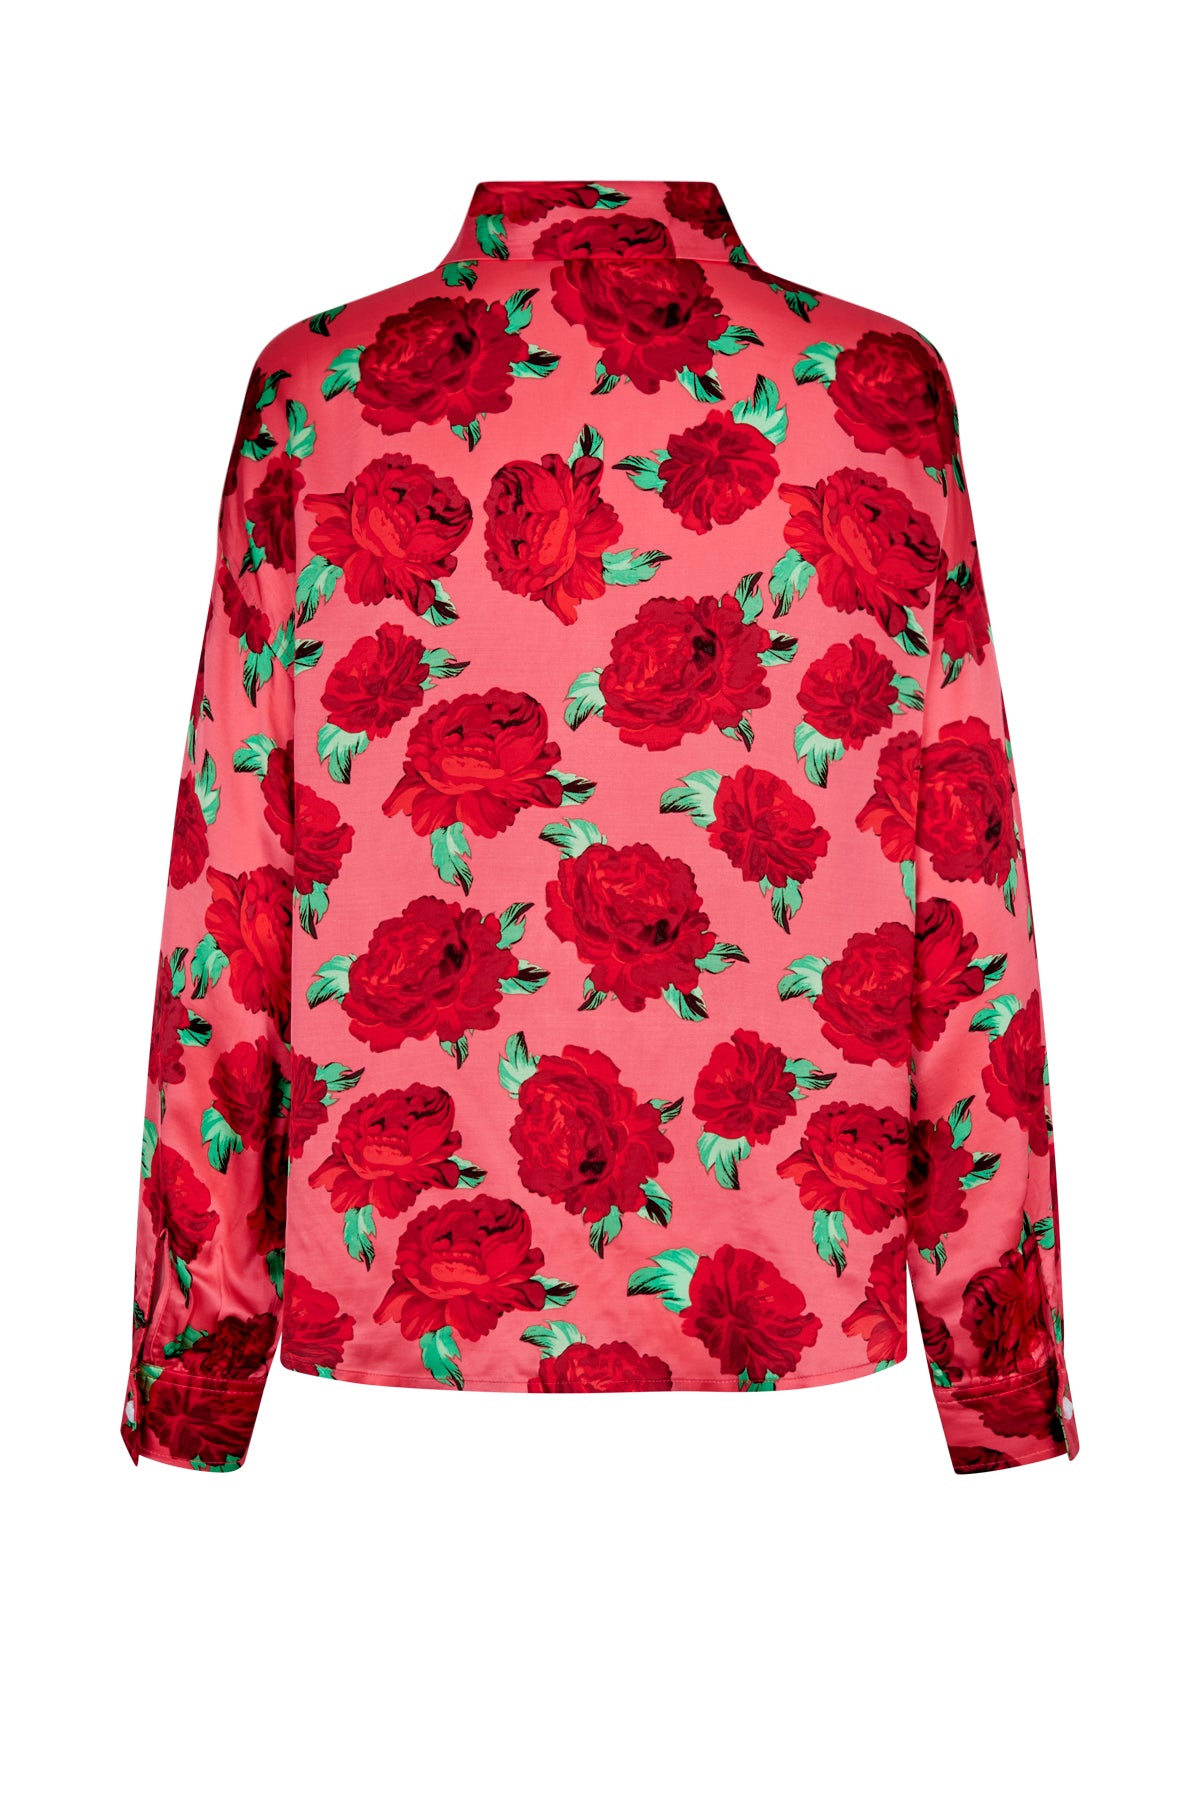 CRAS Gina Shirt Shirt 8019 Coral Roses